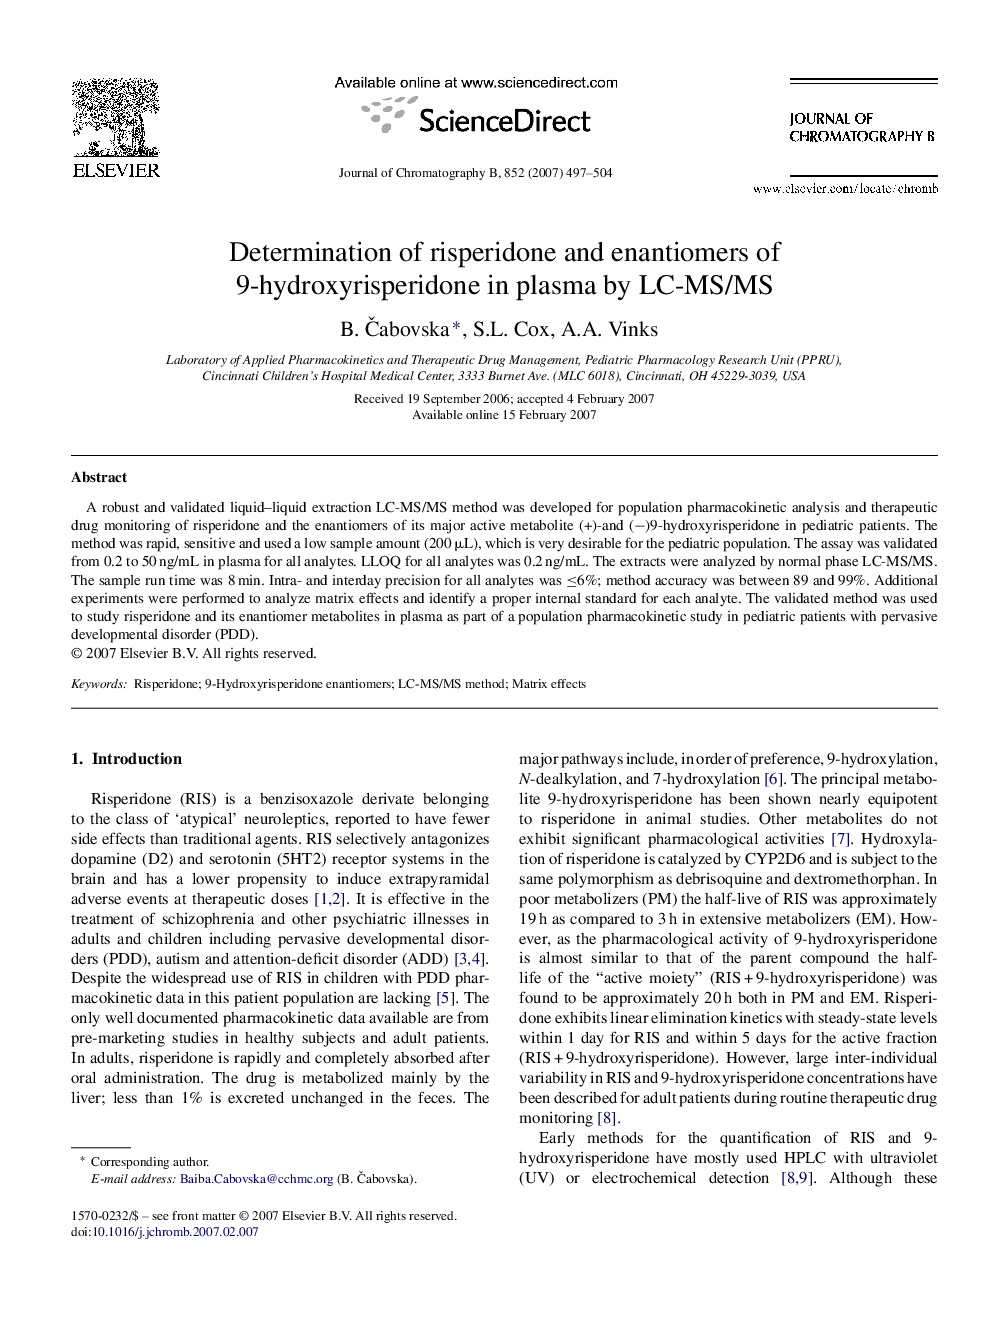 Determination of risperidone and enantiomers of 9-hydroxyrisperidone in plasma by LC-MS/MS